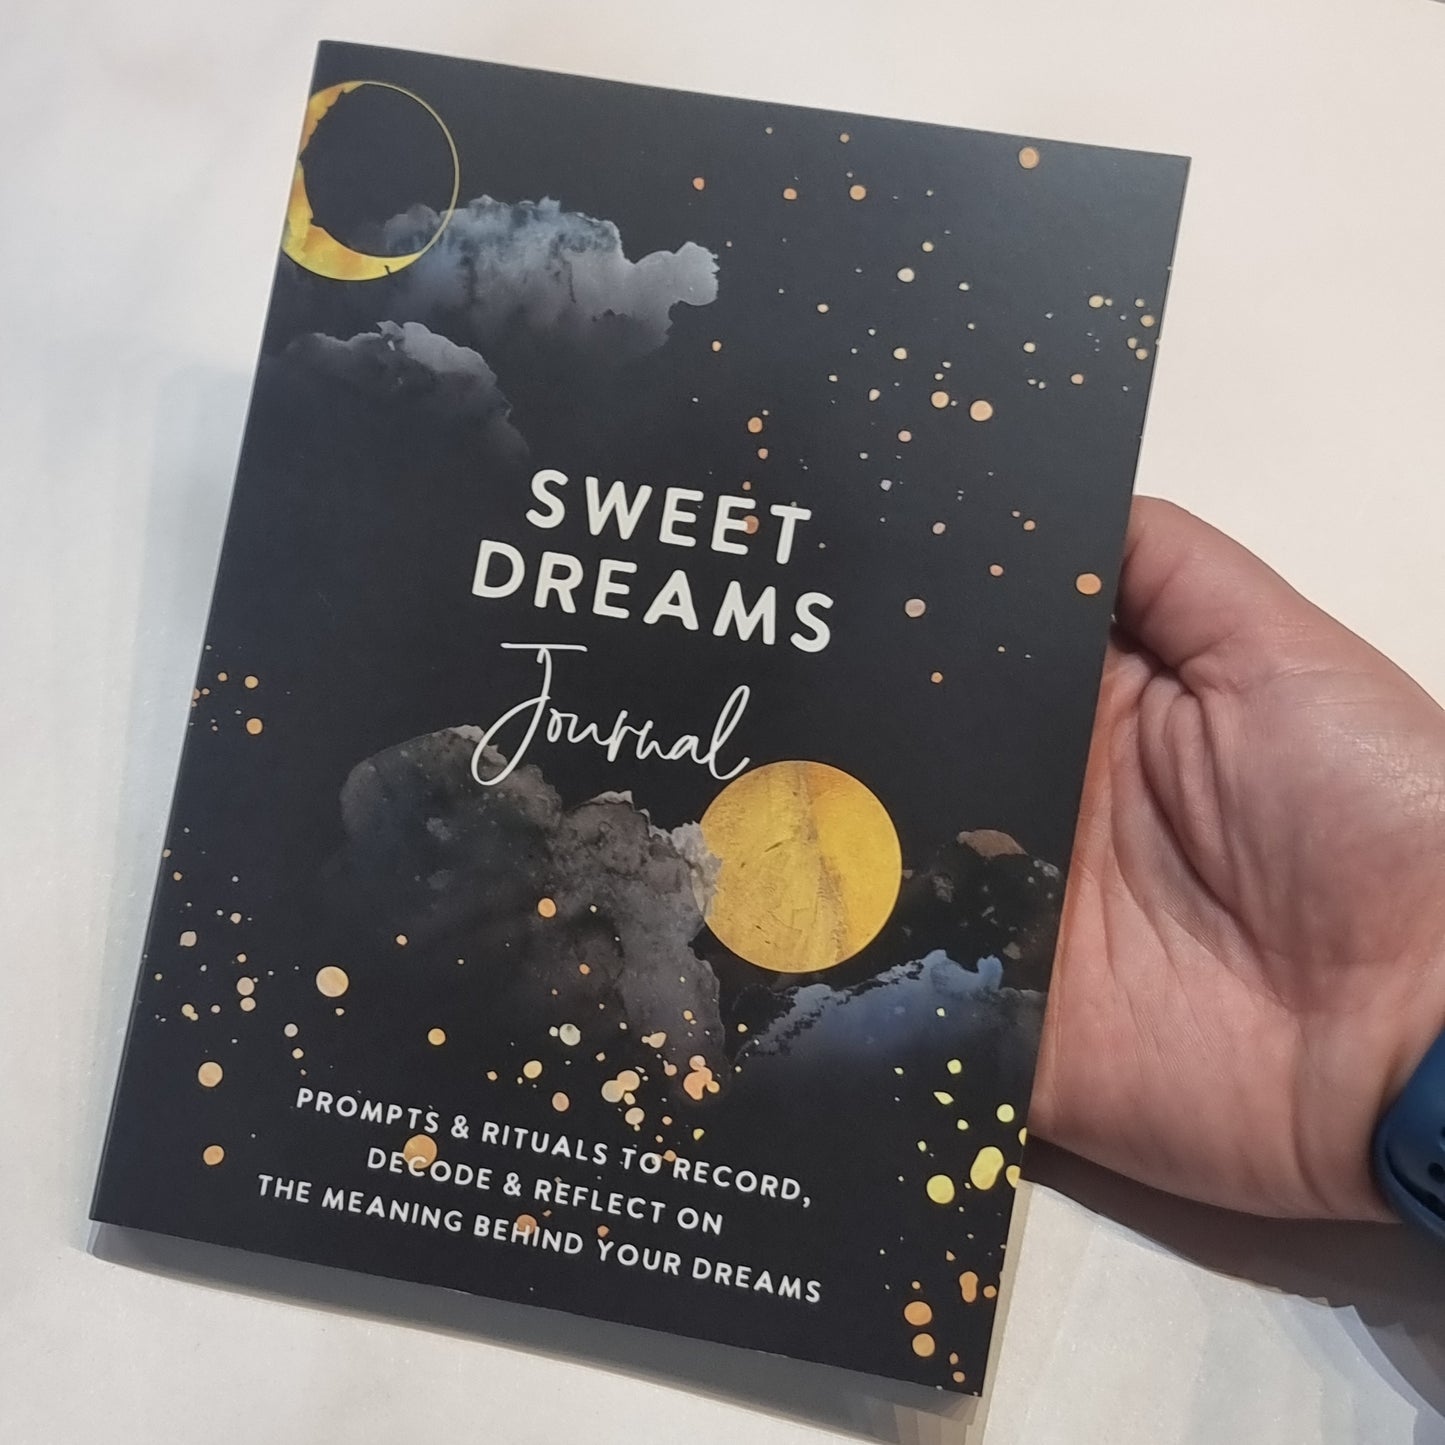 Sweet dreams journal - Rivendell Shop